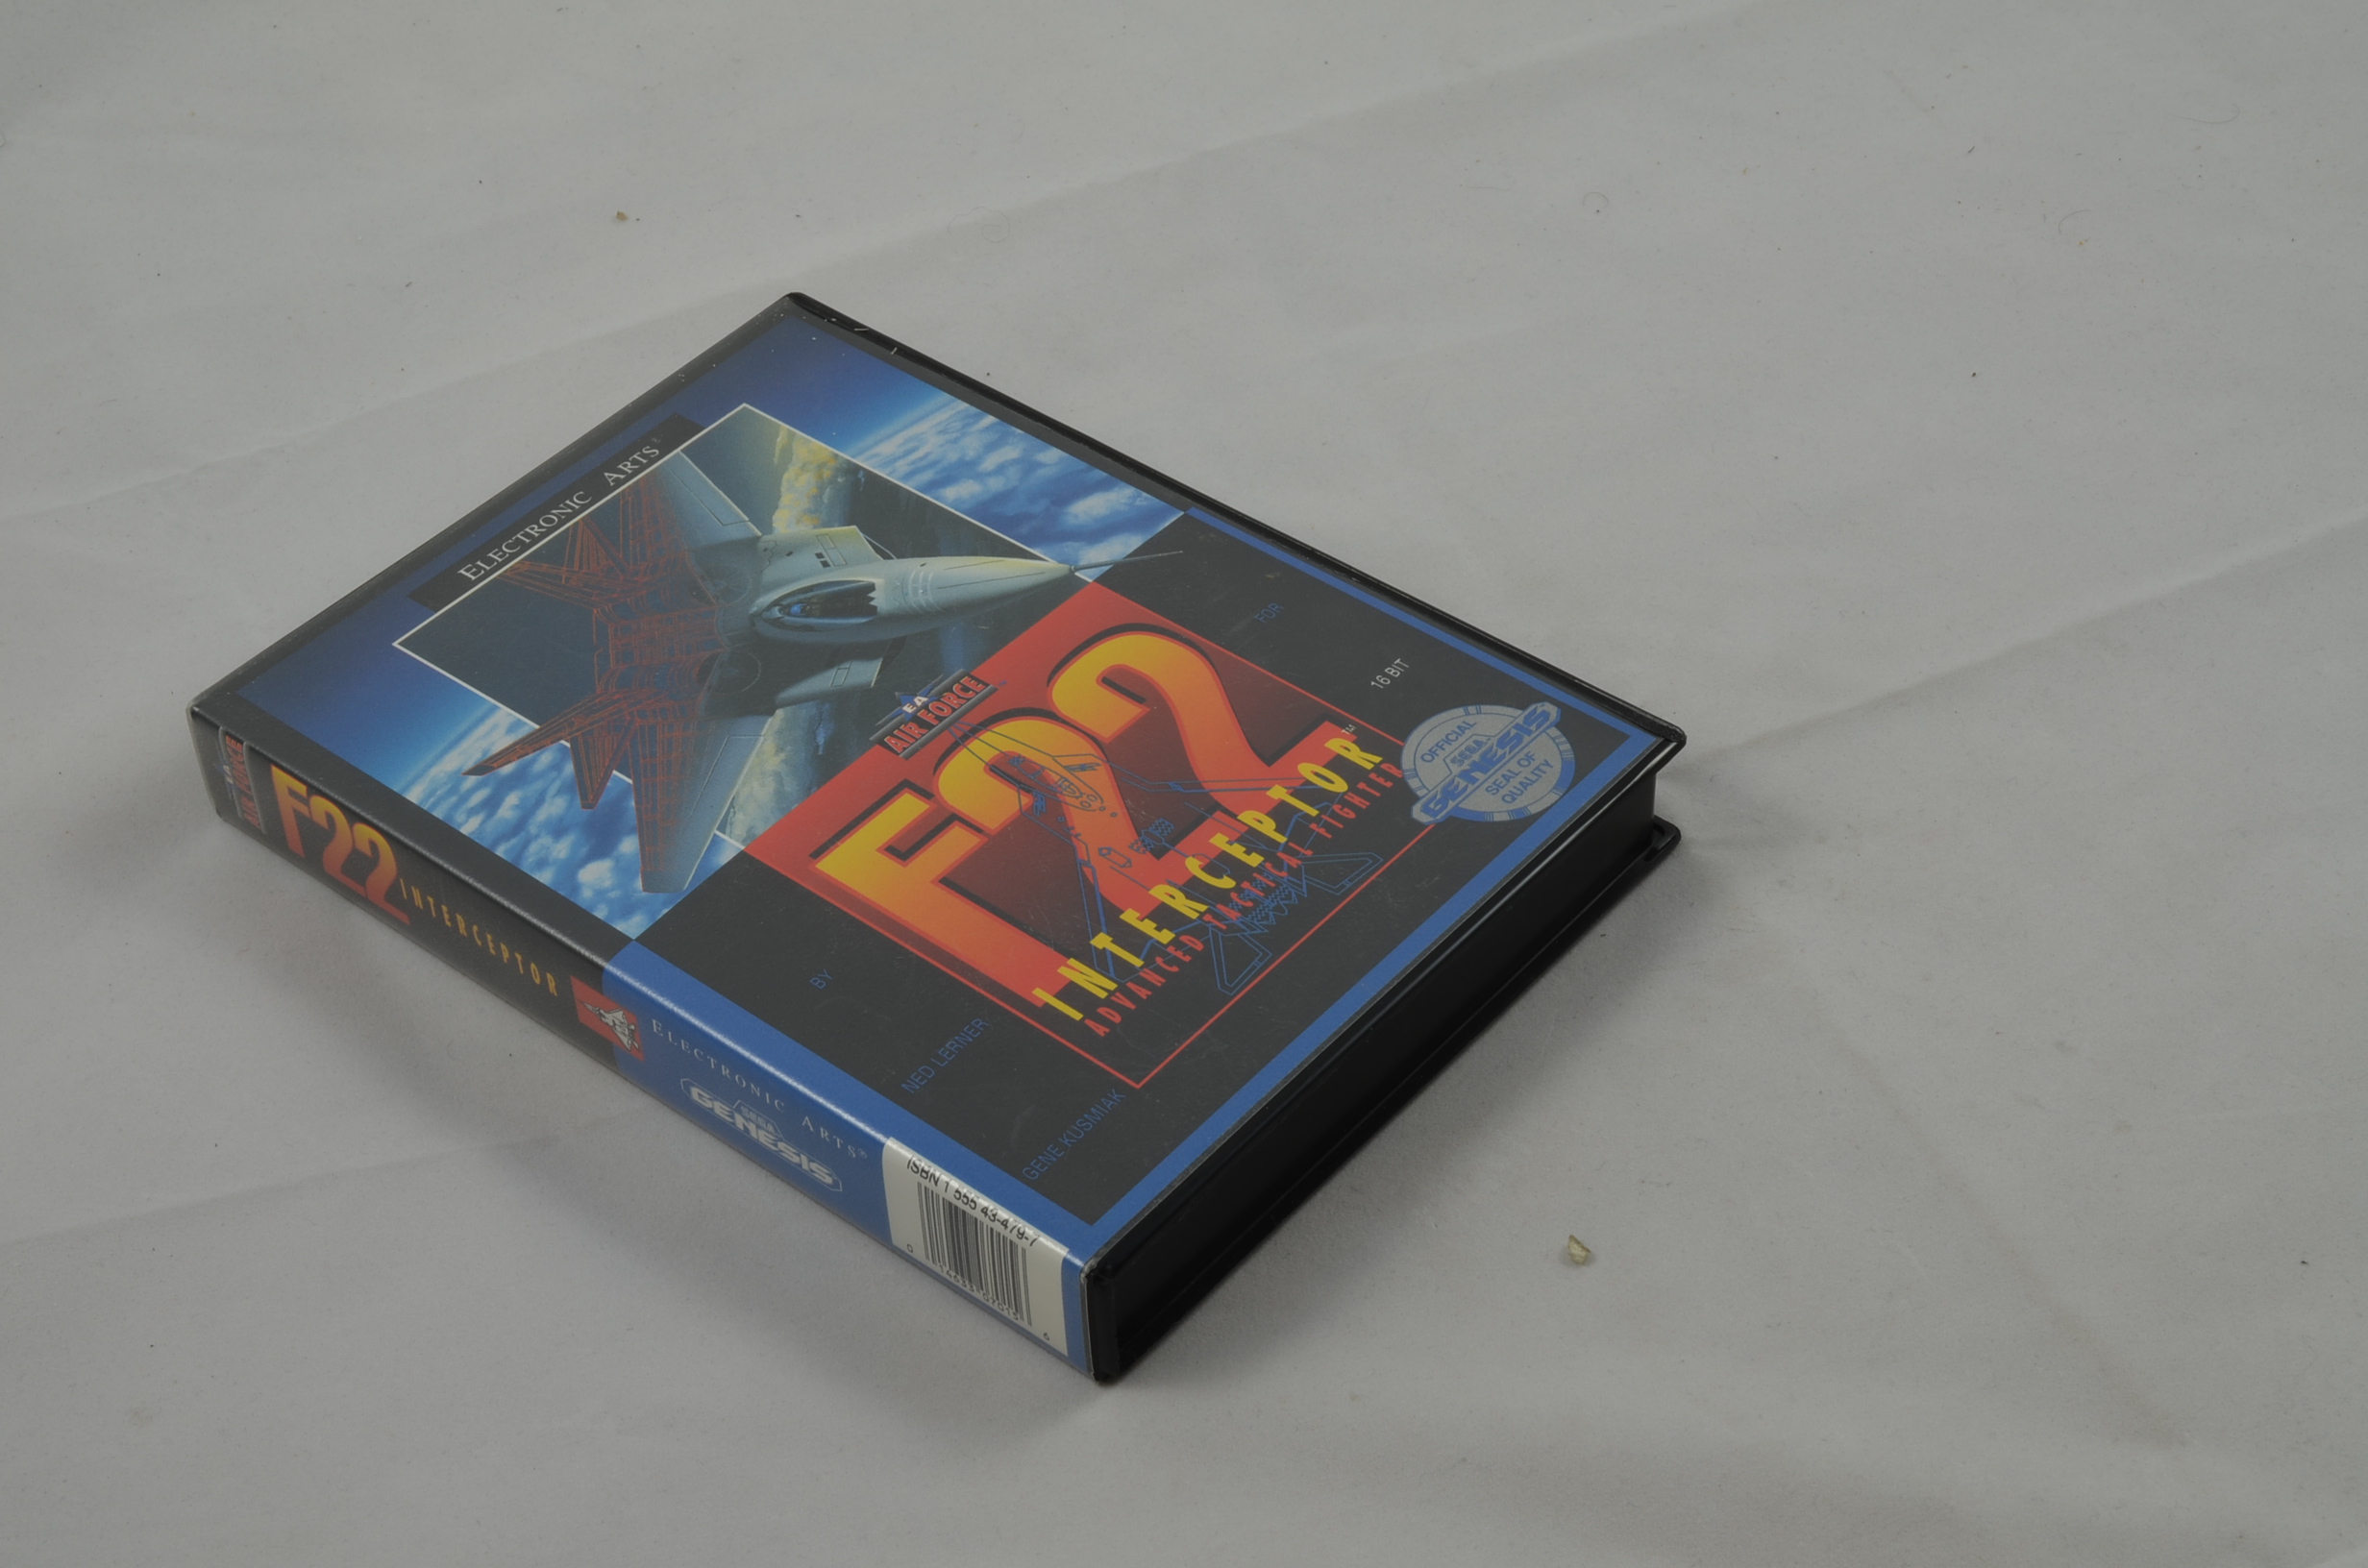 Produktbild von F22 Interceptor Sega Mega Drive Spiel CIB (sehr gut)